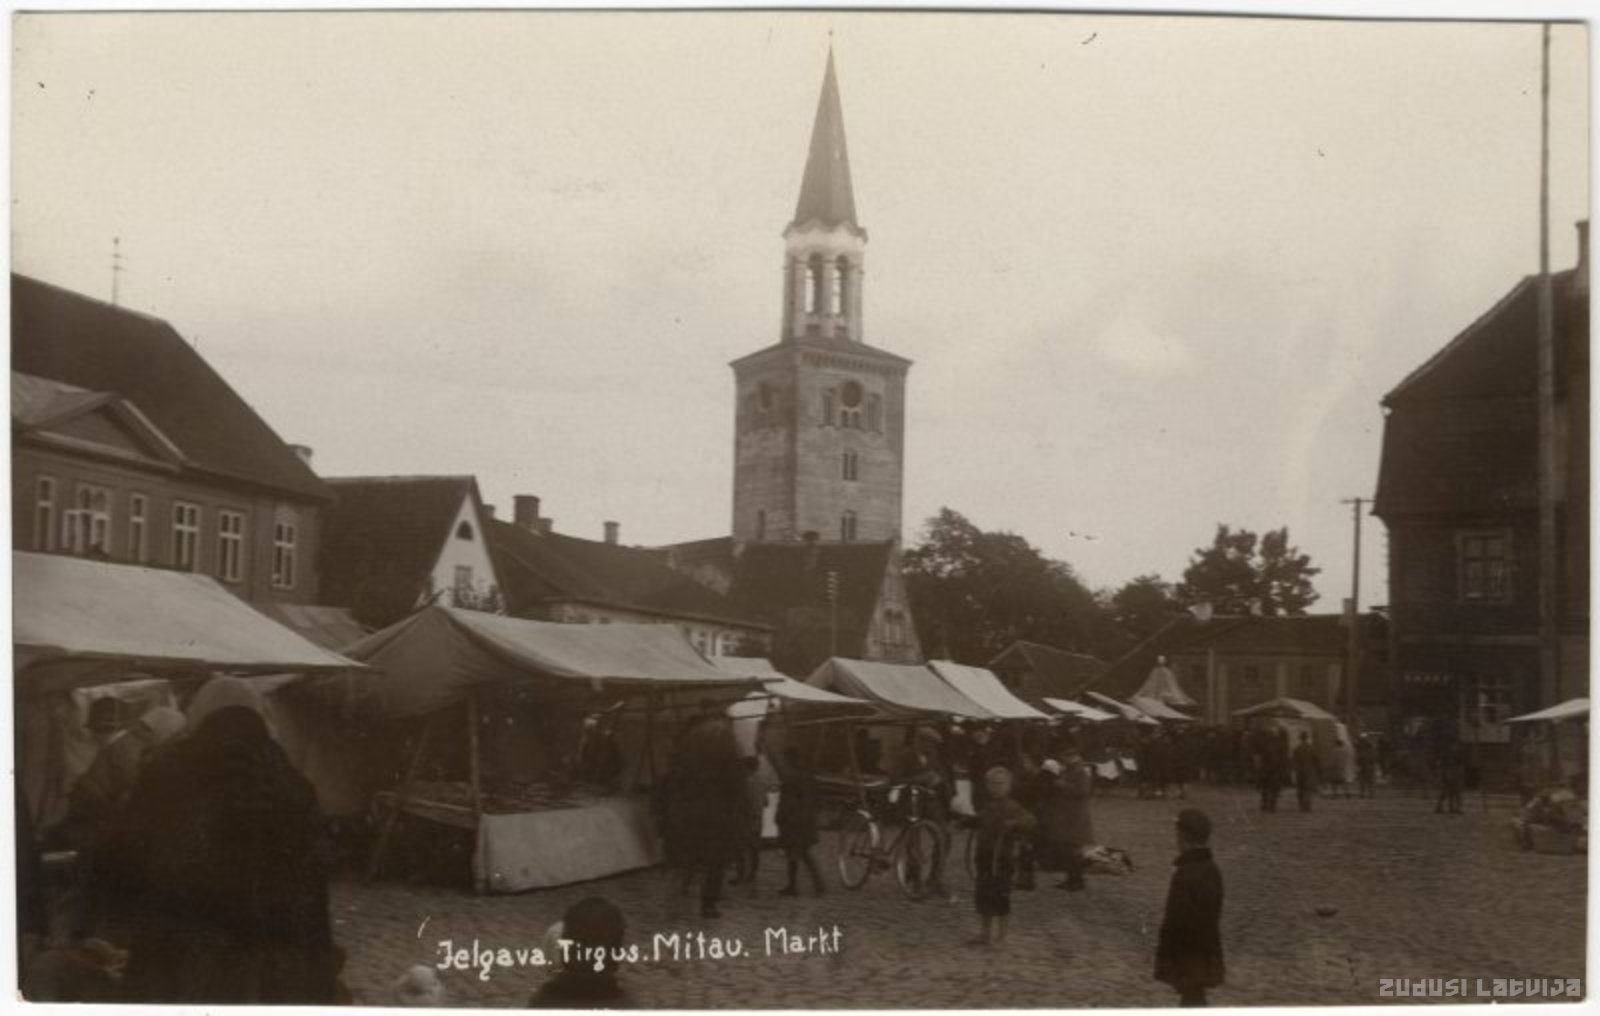 Jelgava. Market, Jelgava. Market area, Mitau. Market